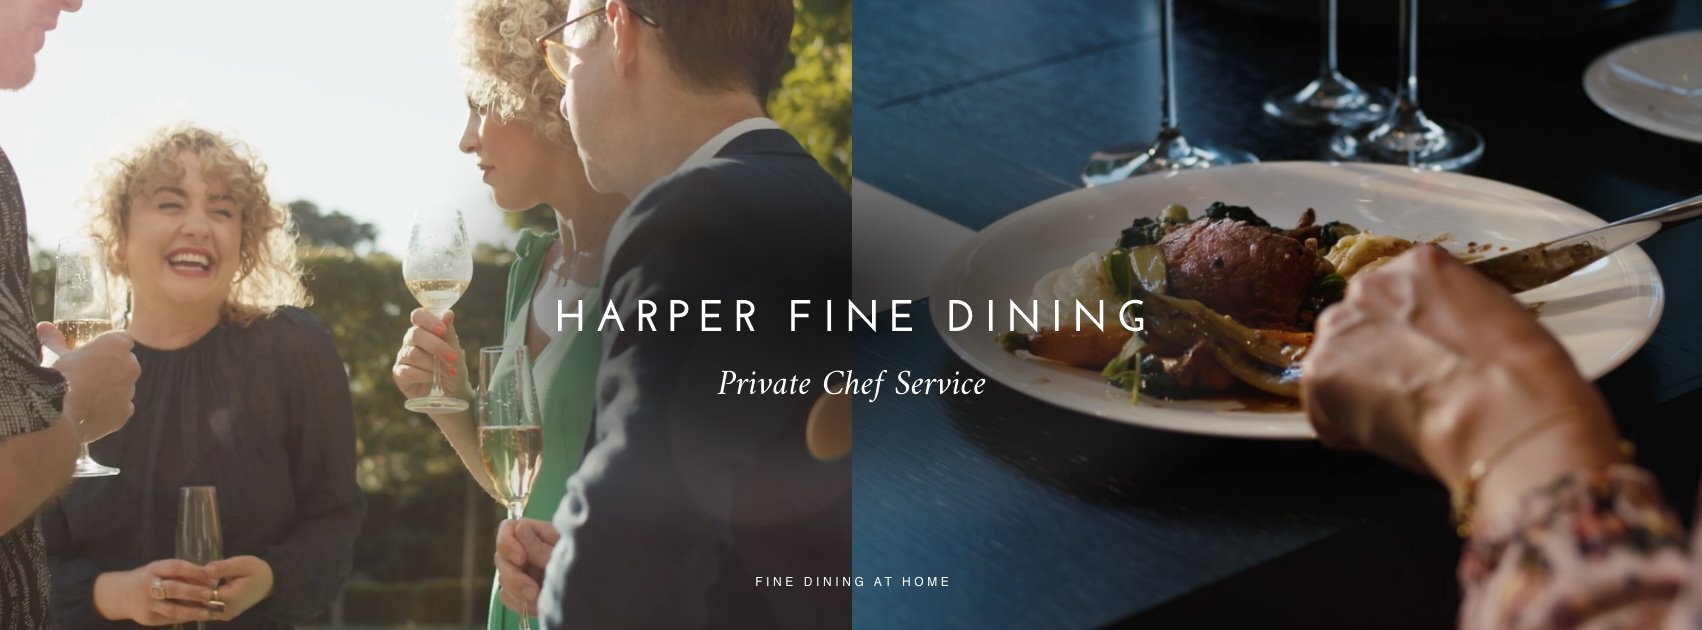 Harper Fine Dining